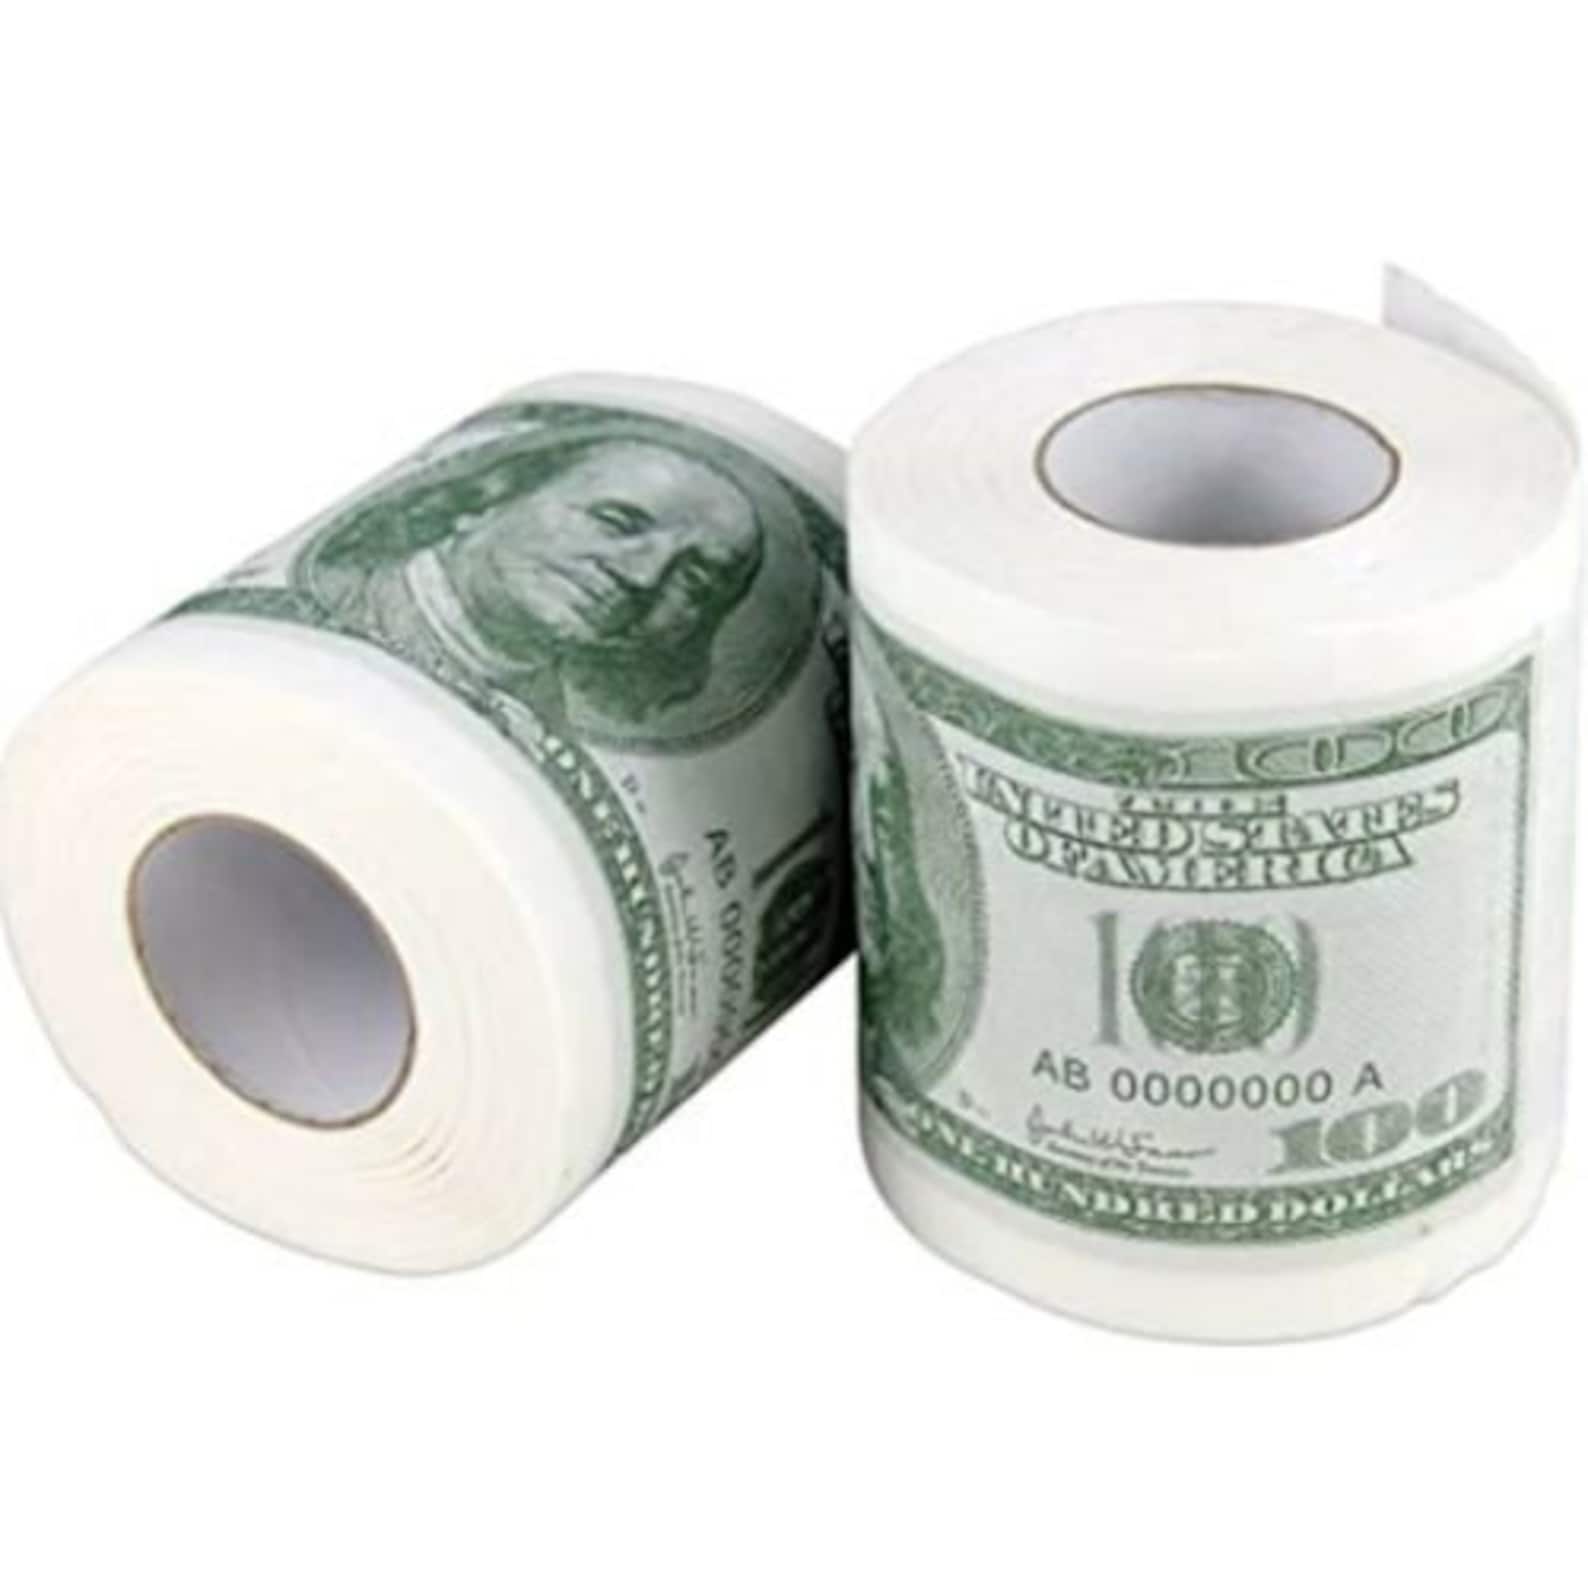 Бумажный доллар цена. Туалетная бумага. Долар туалетная бумага. Туадетная бумага долар. Рулон туалетной бумаги с долларом.